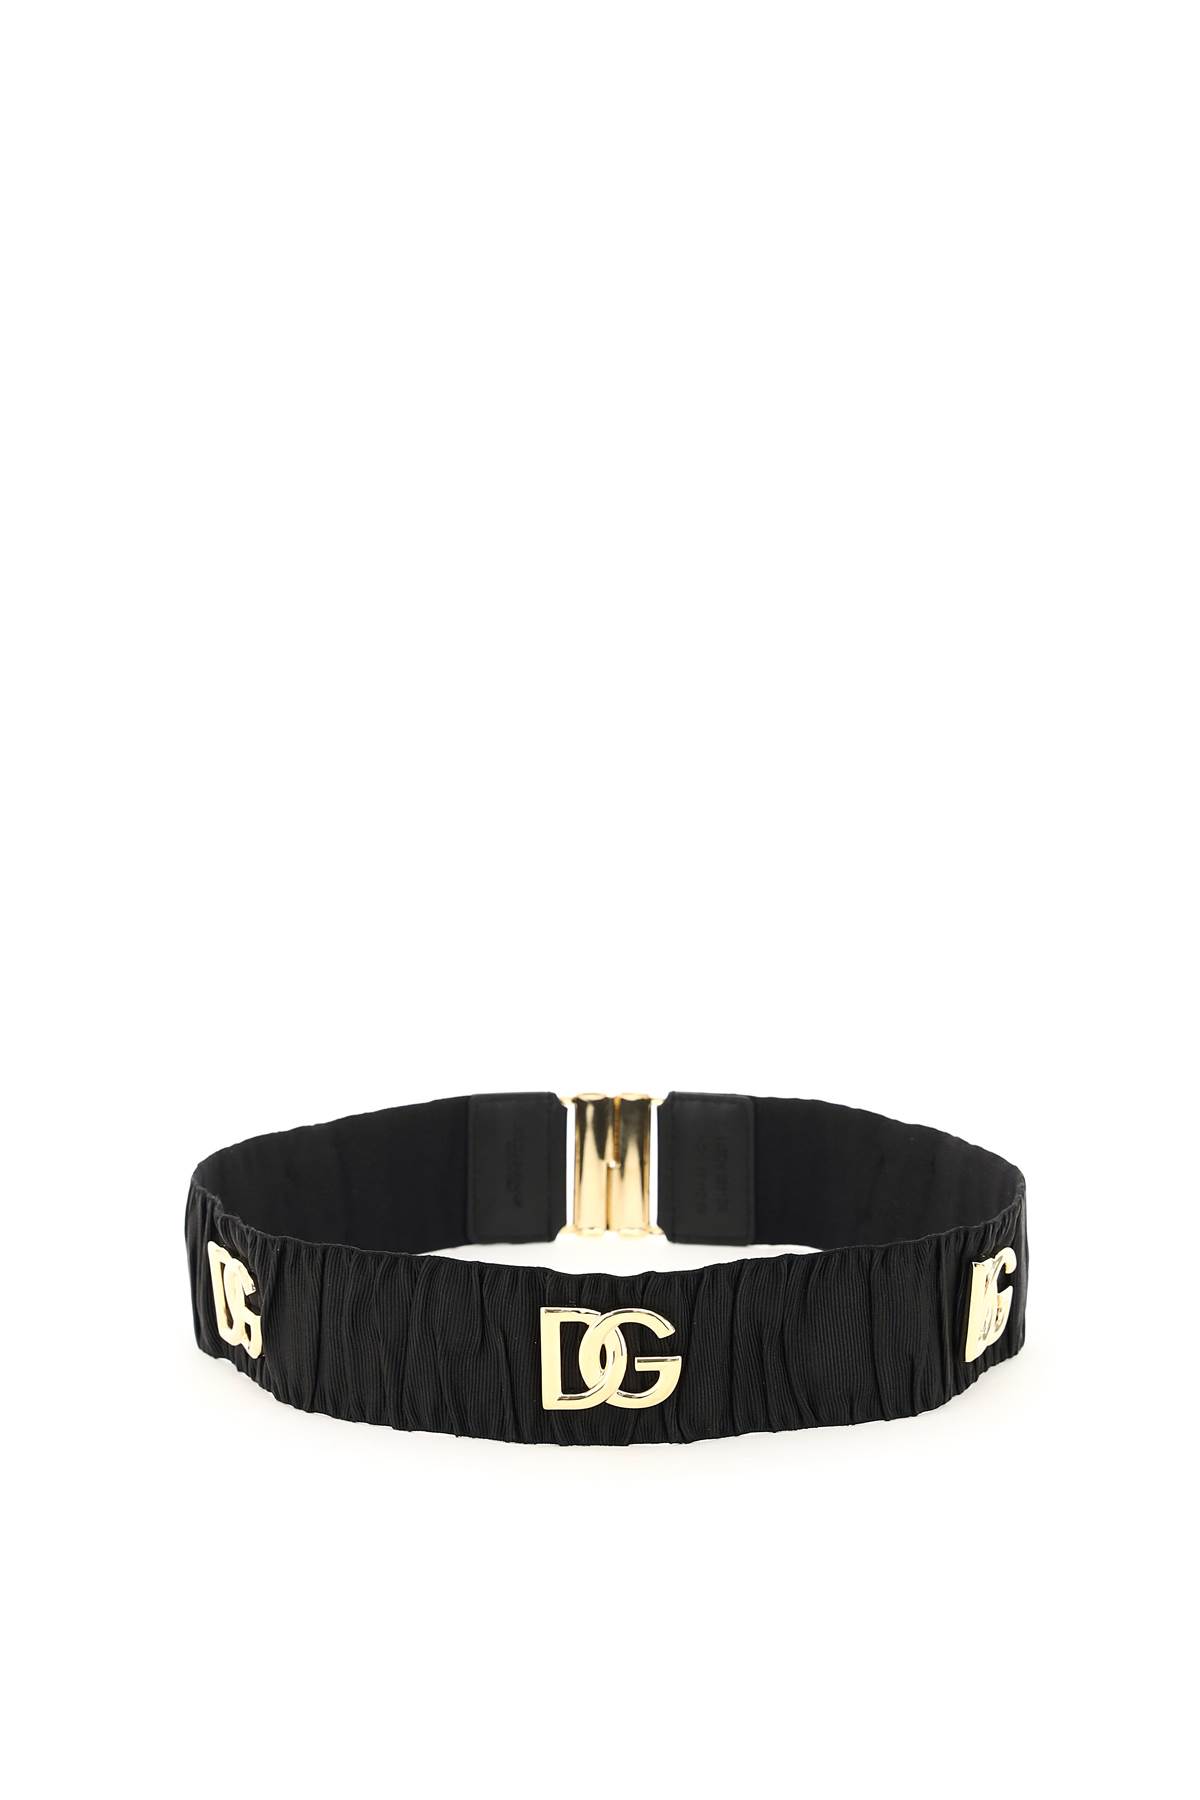 Dolce & Gabbana Stretch Dg Logo Belt